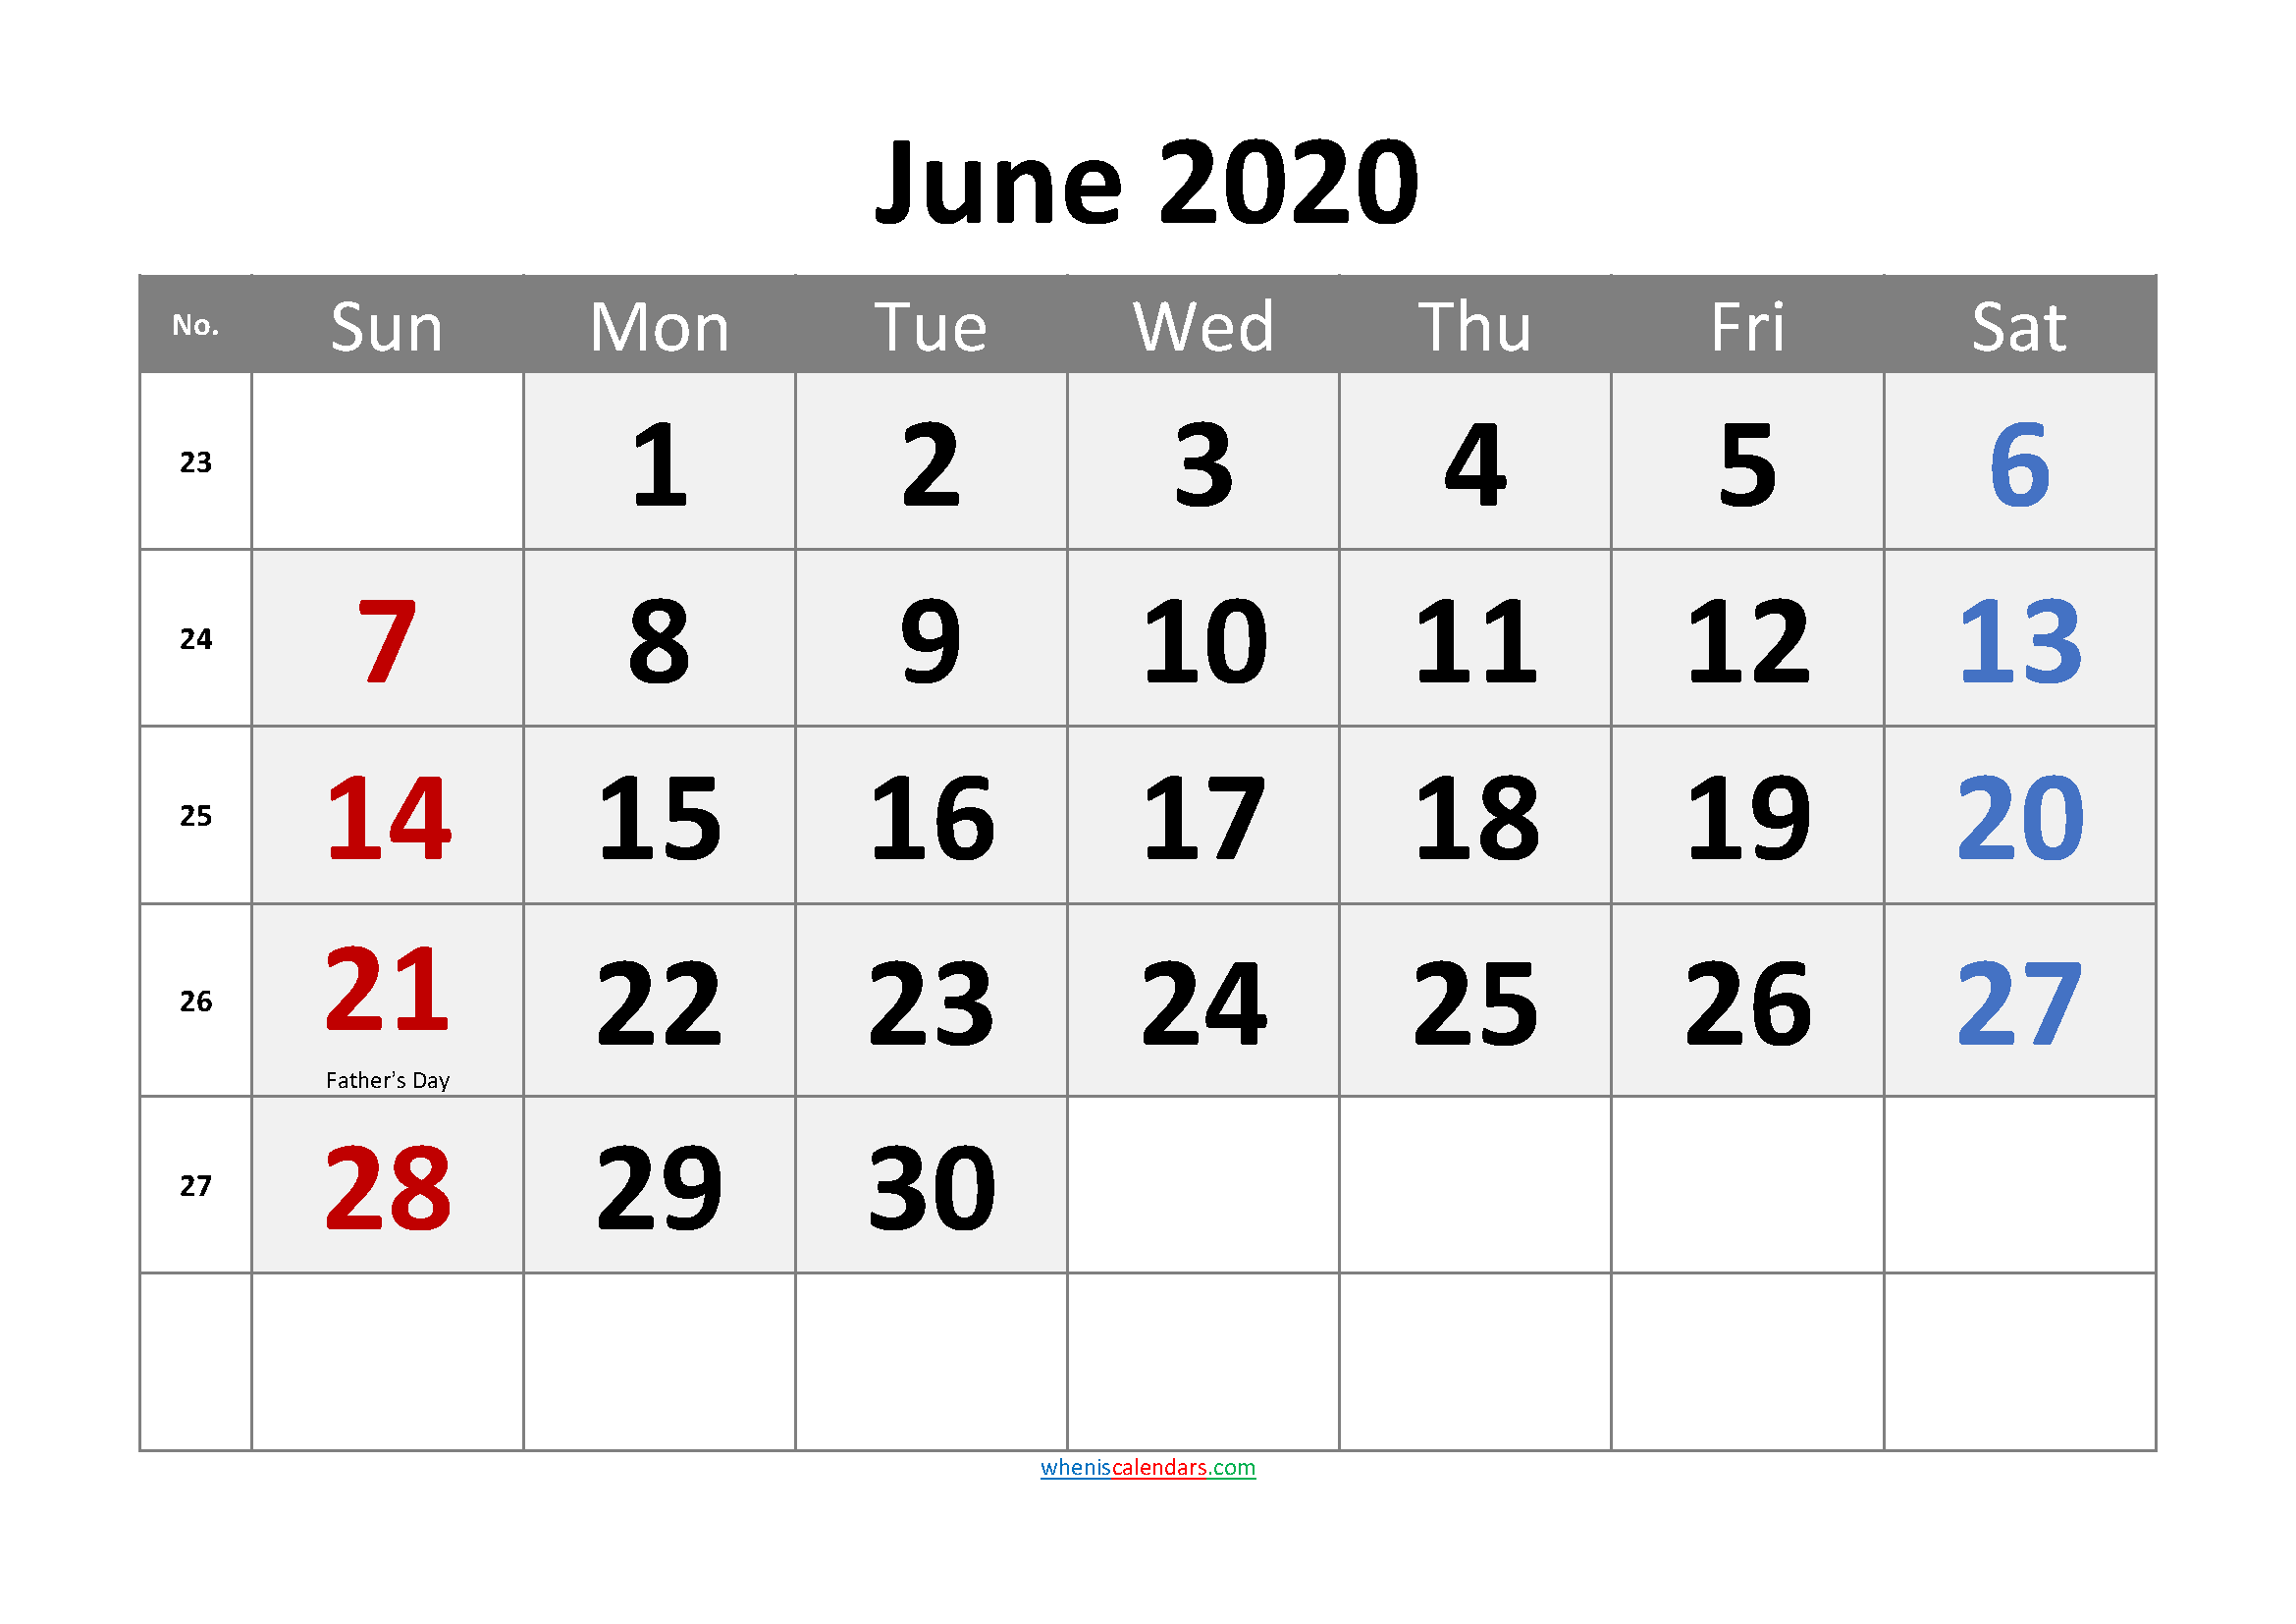 JUNE 2020 Printable Calendar with Holidays